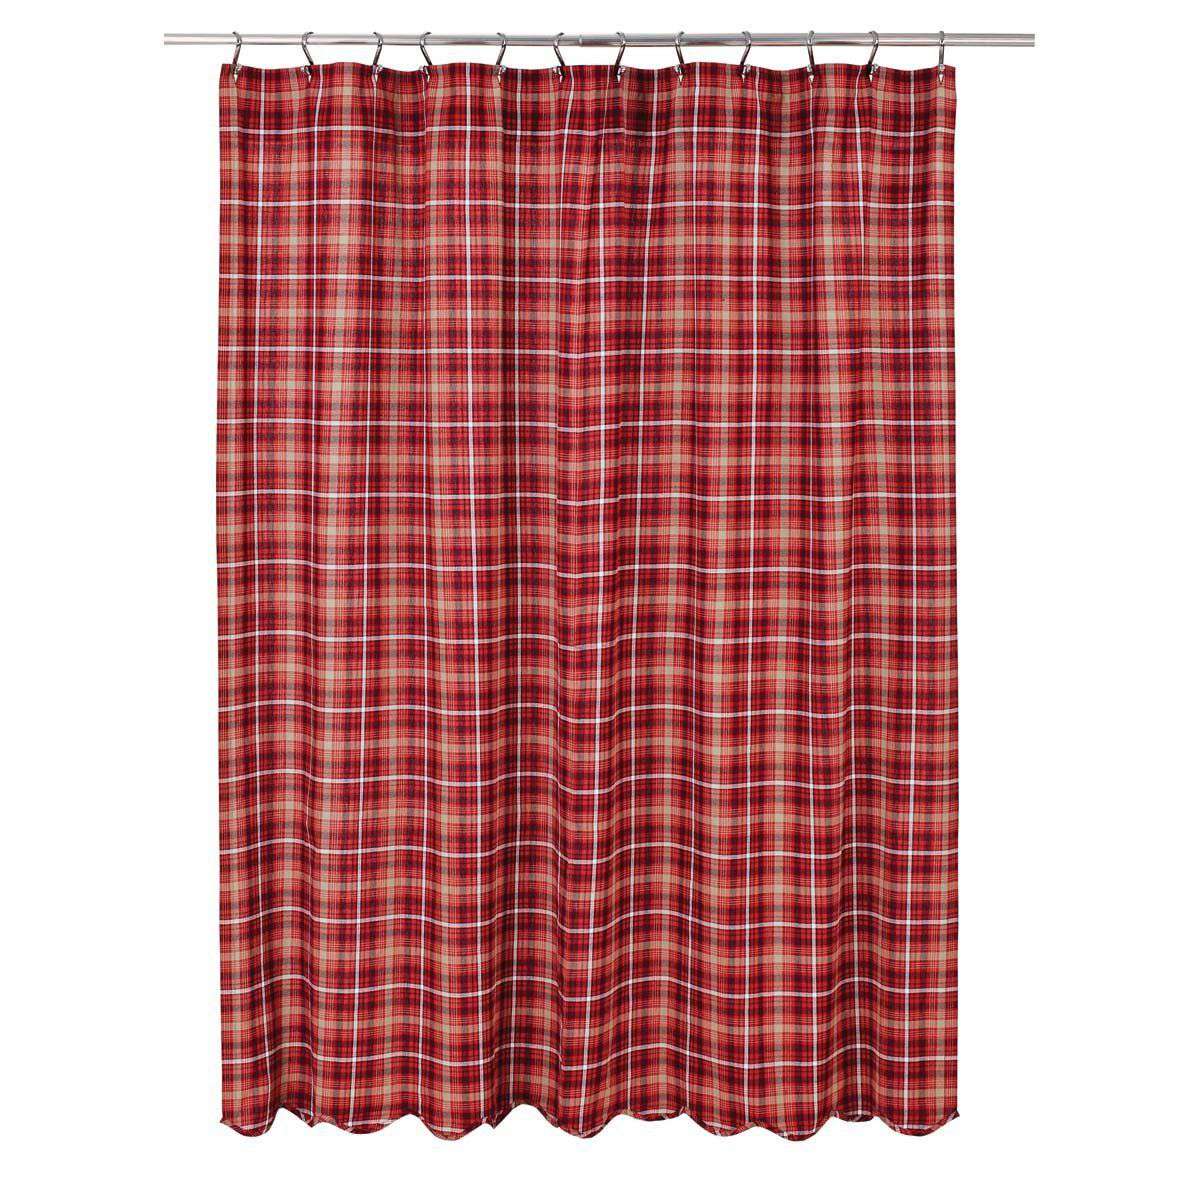 Braxton Scalloped Shower Curtain 72"x72" curtain VHC Brands 